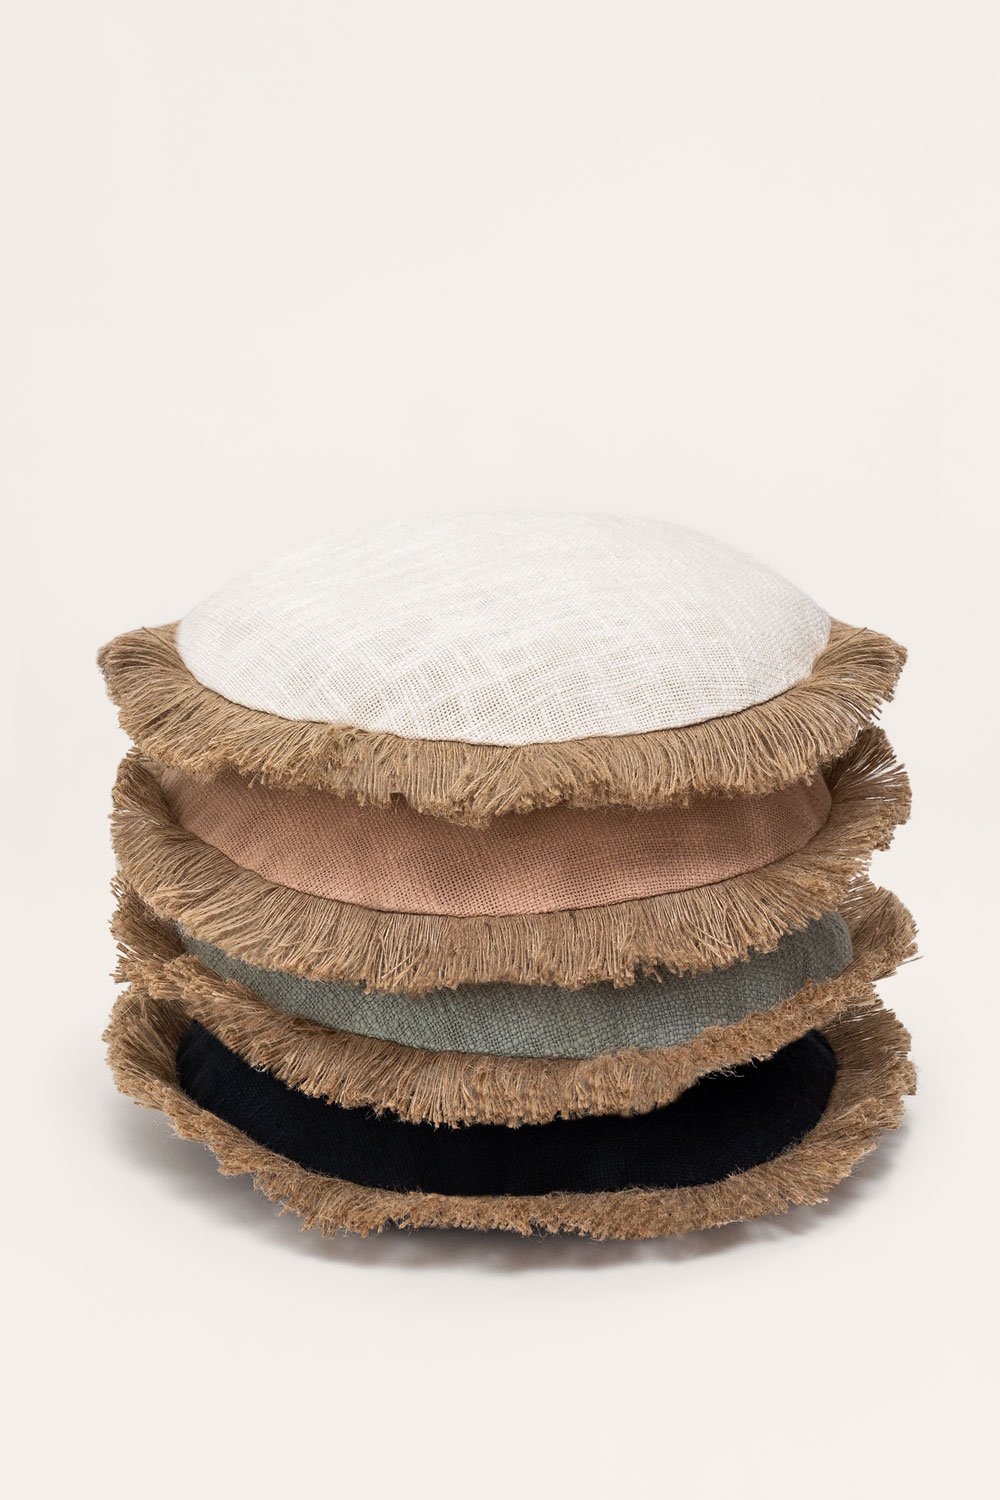 Cuscino rotondo in cotone (Ø40 cm) Paraiba - SKLUM